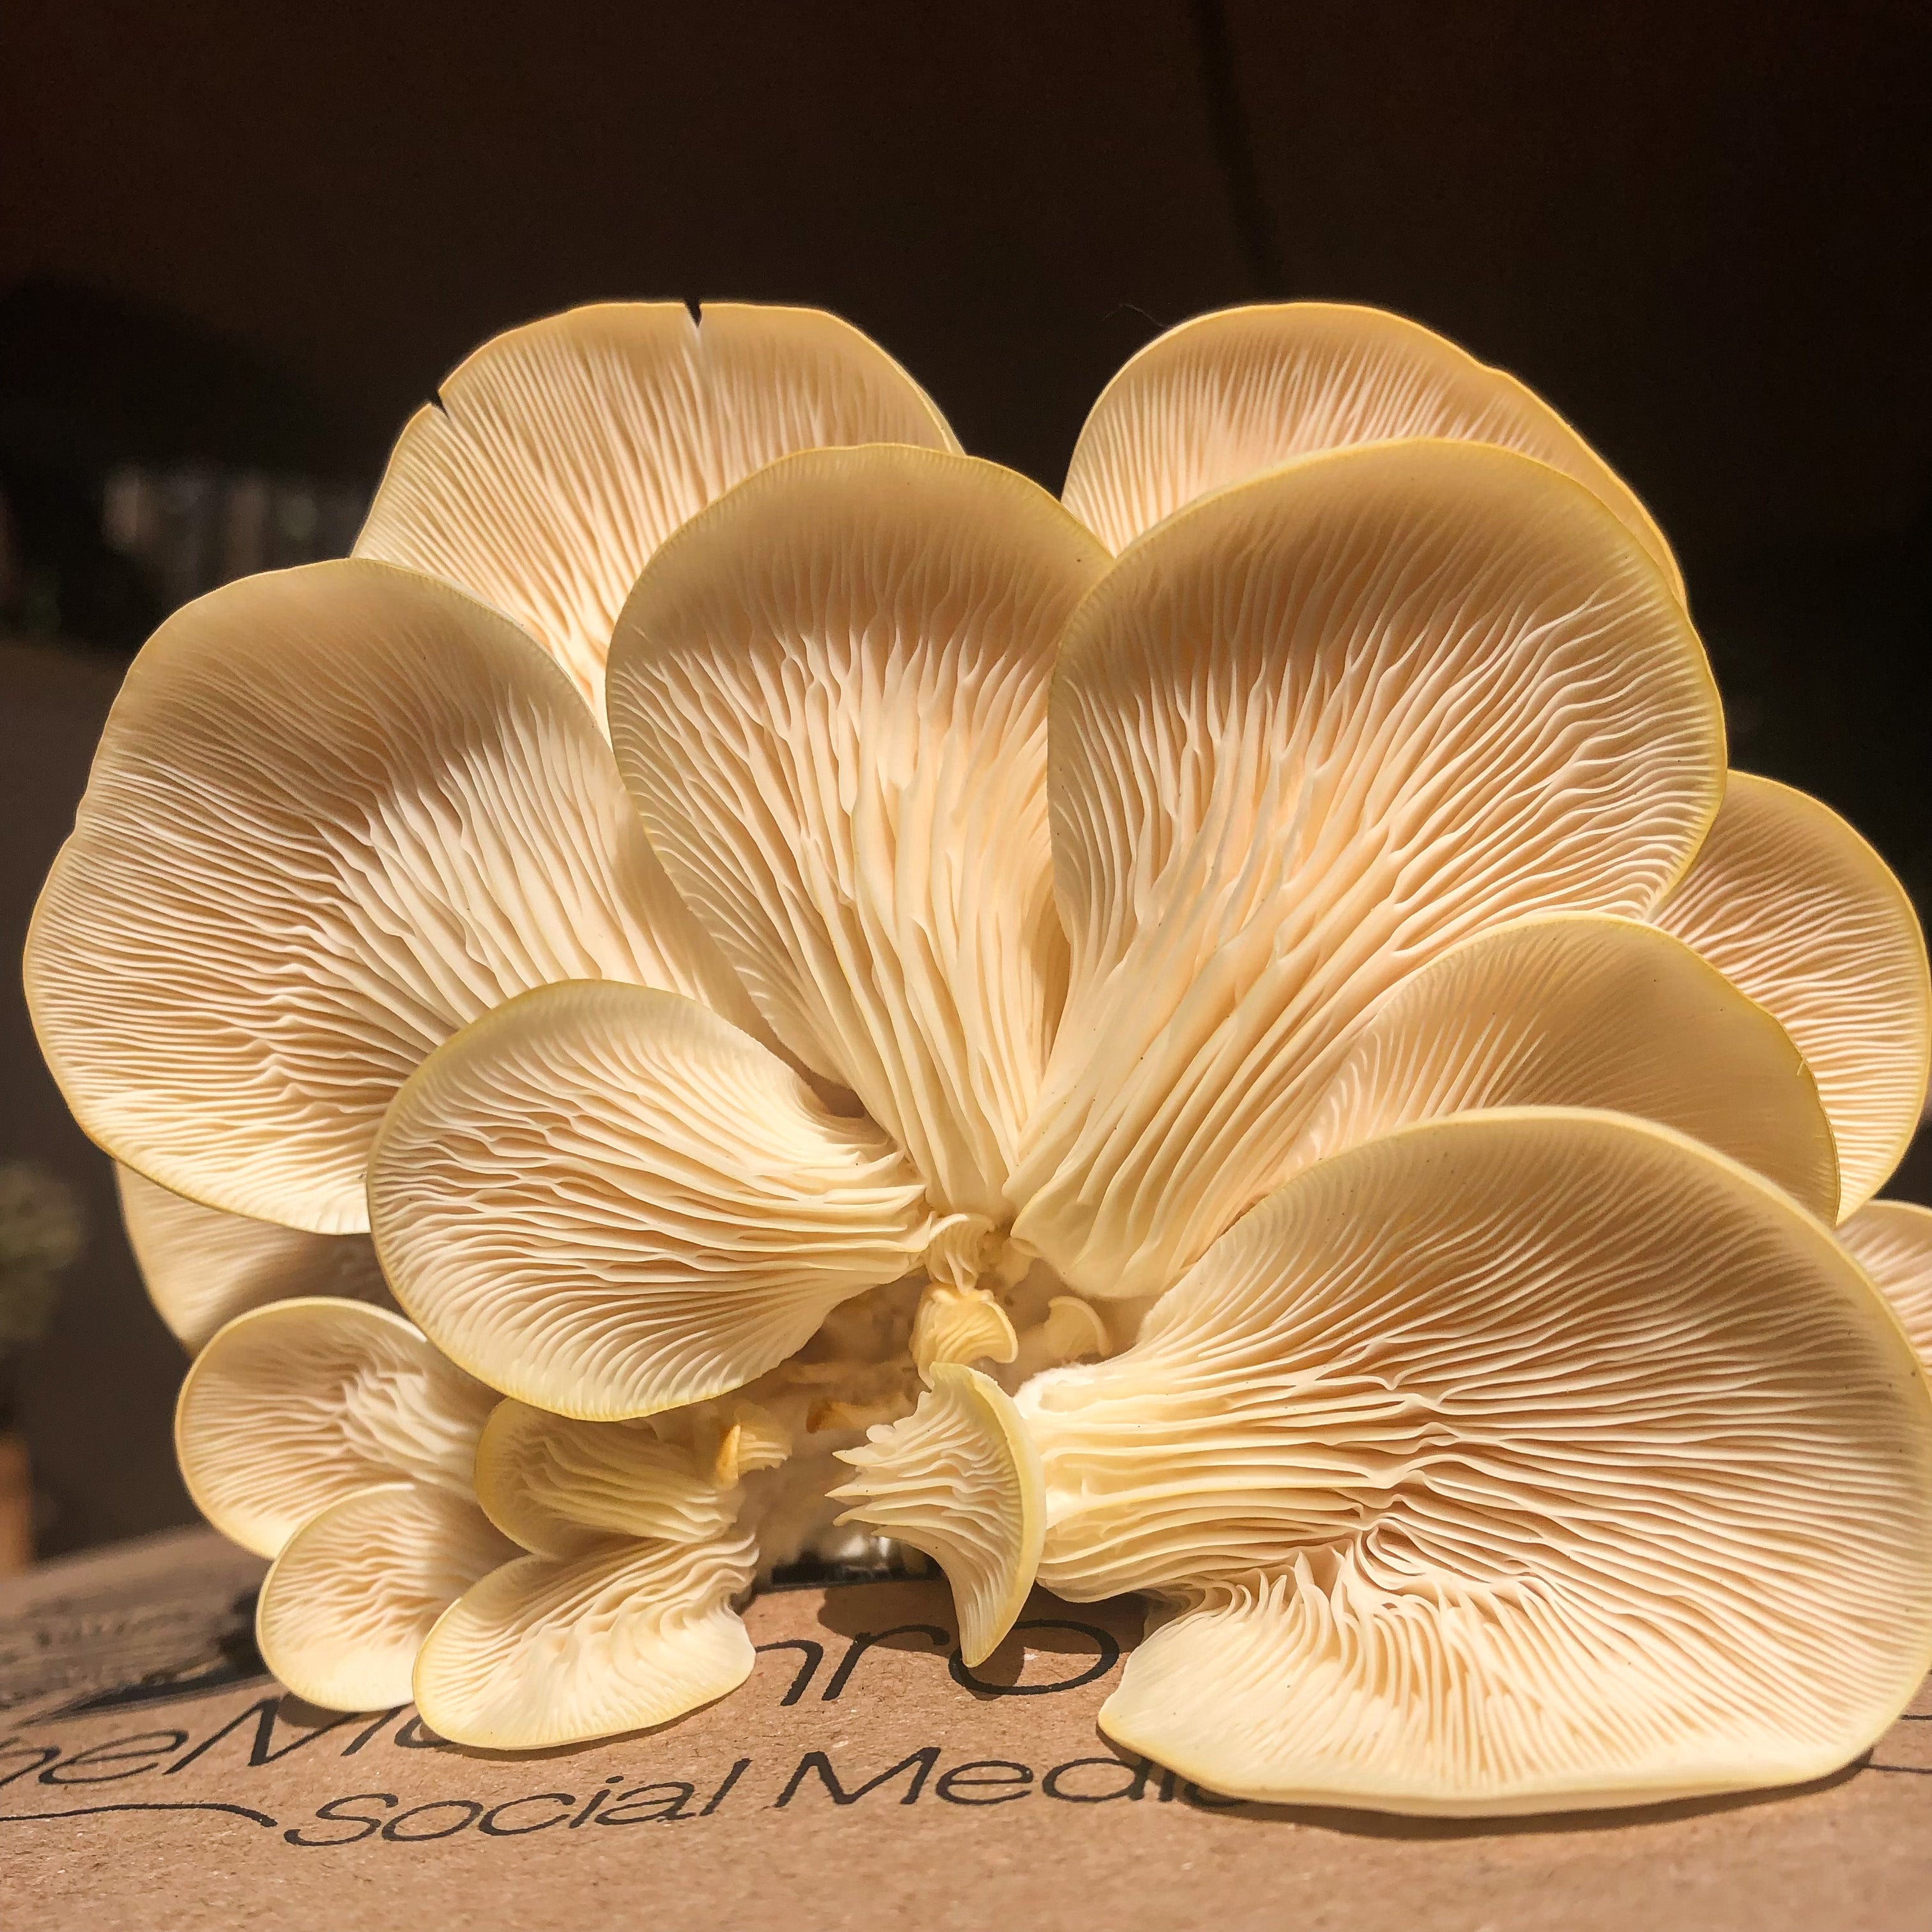 The mushroom box, The BEST way to grow Oyster mushrooms, Lionsmane mushroom, Shittake and more medicinal mushrooms at home